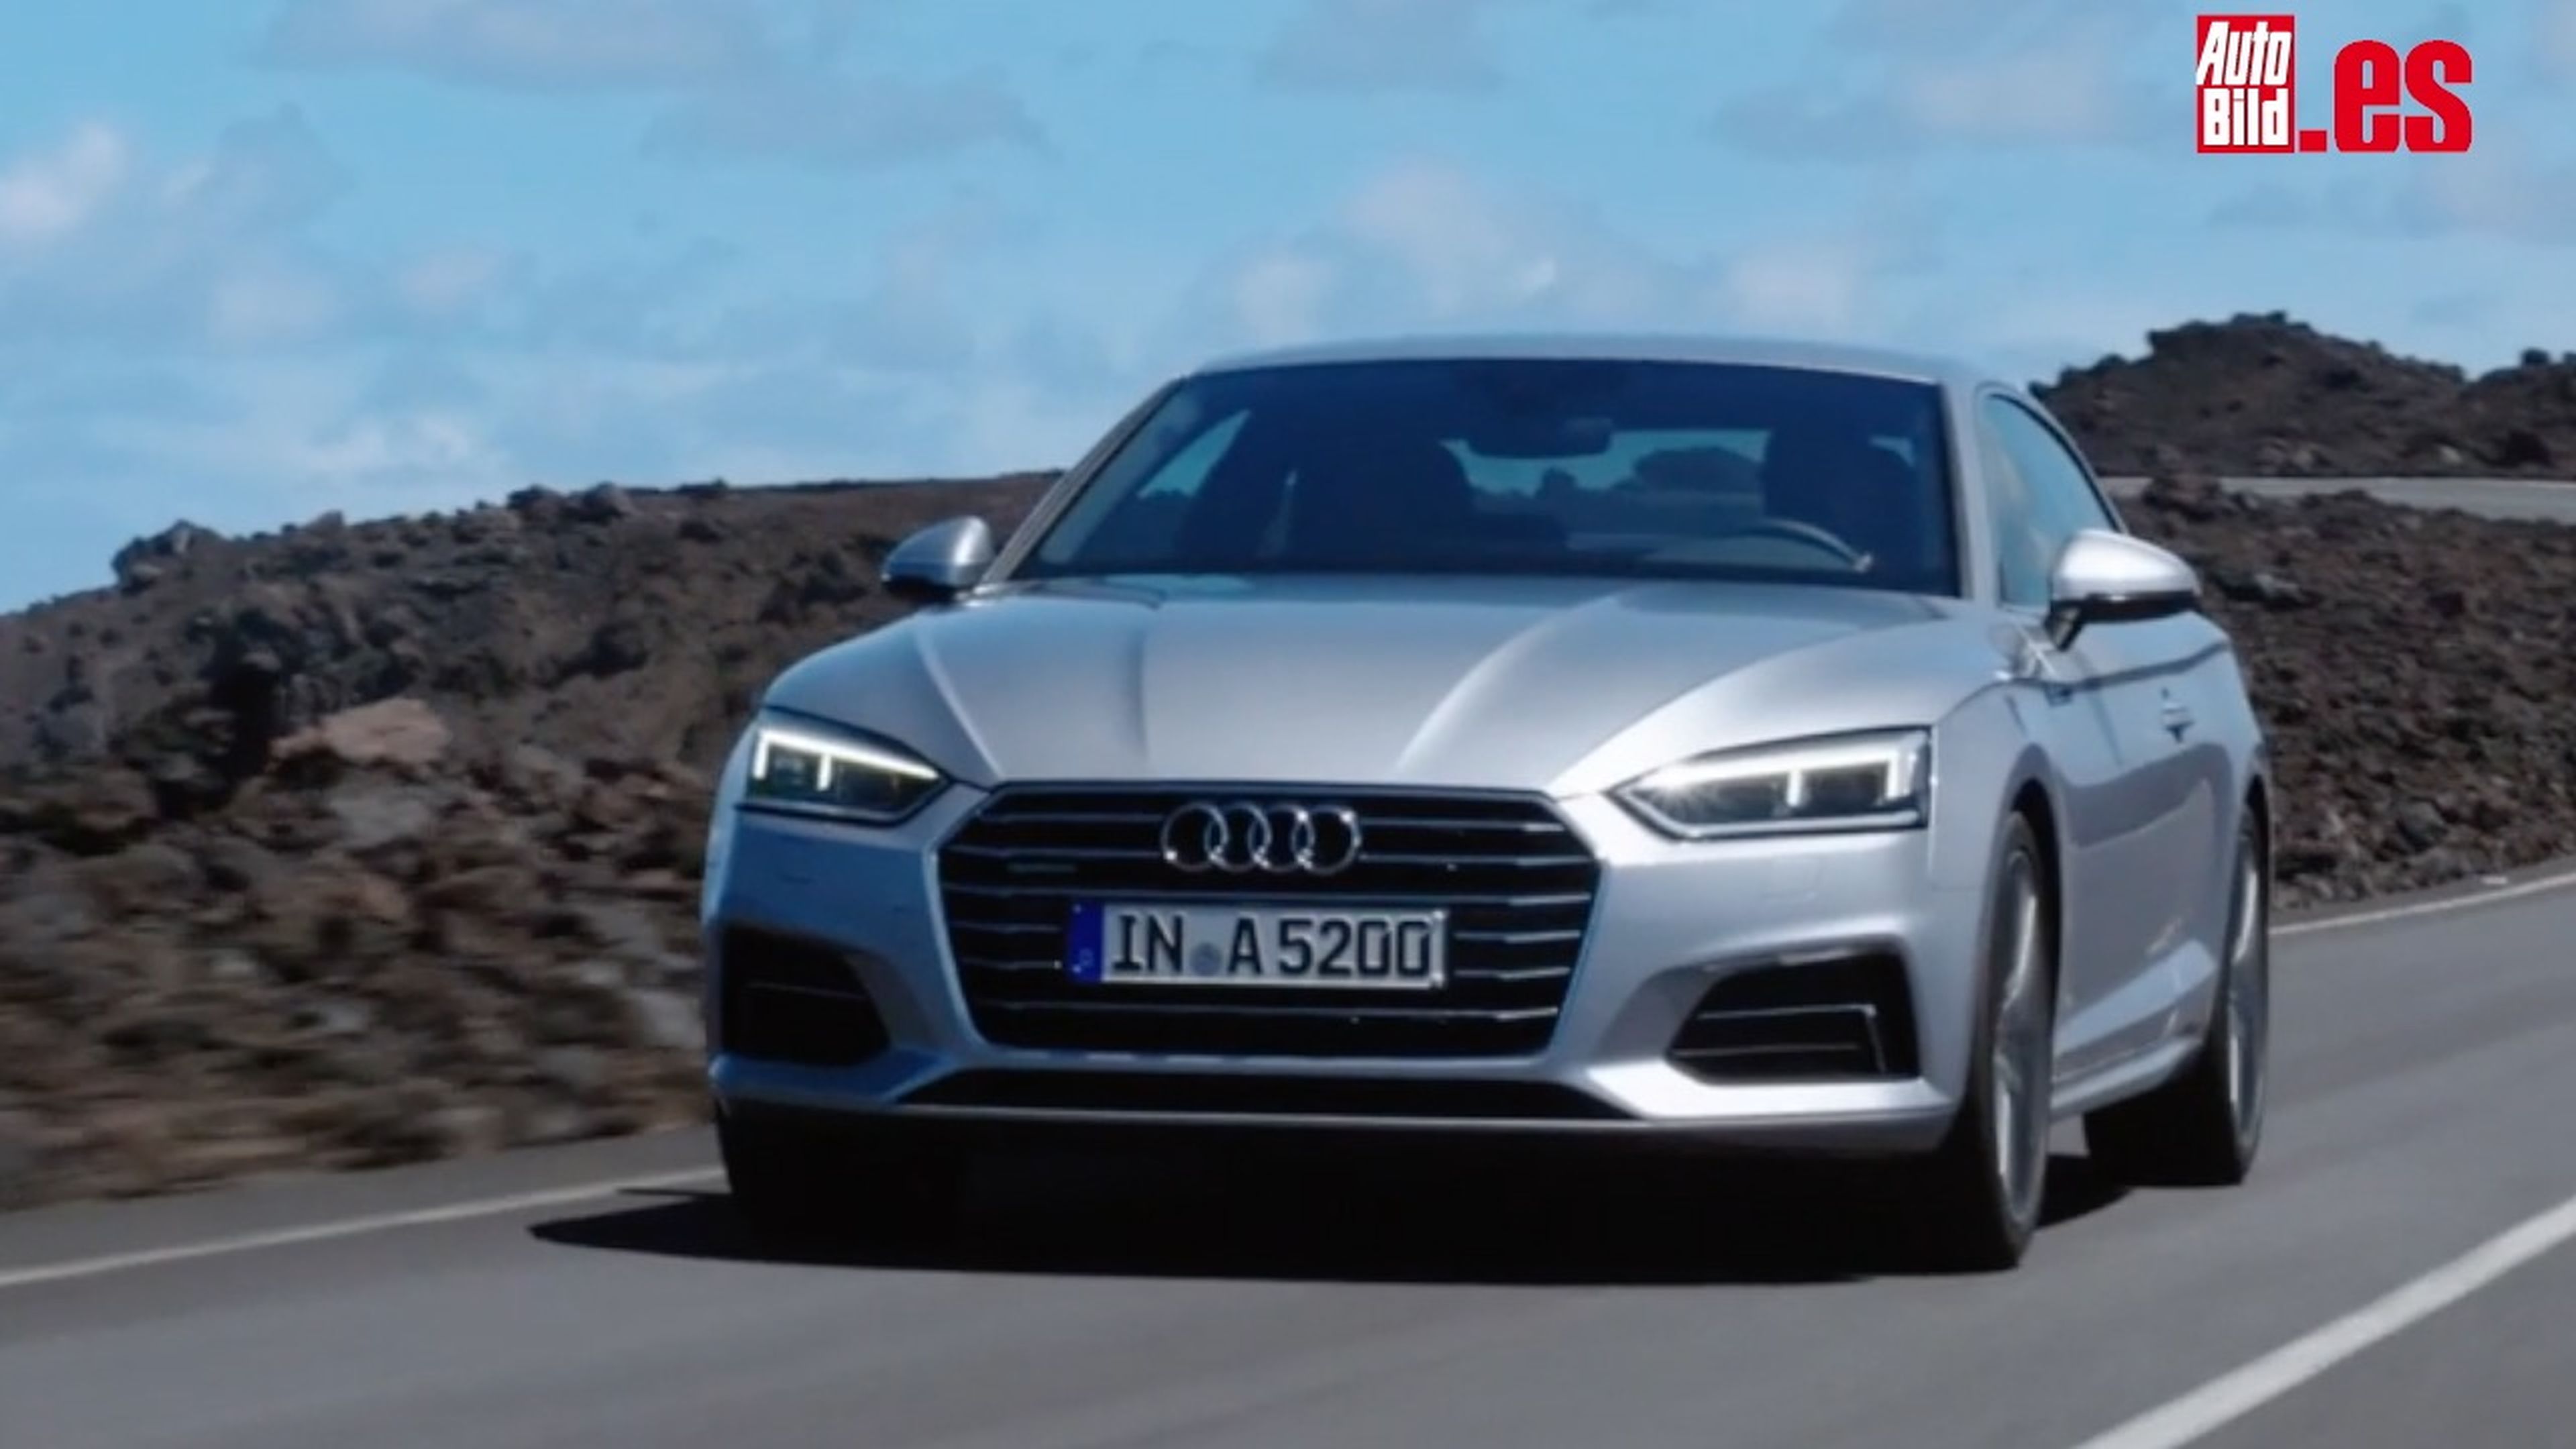 VIDEO: Nuevo Audi A5 2016